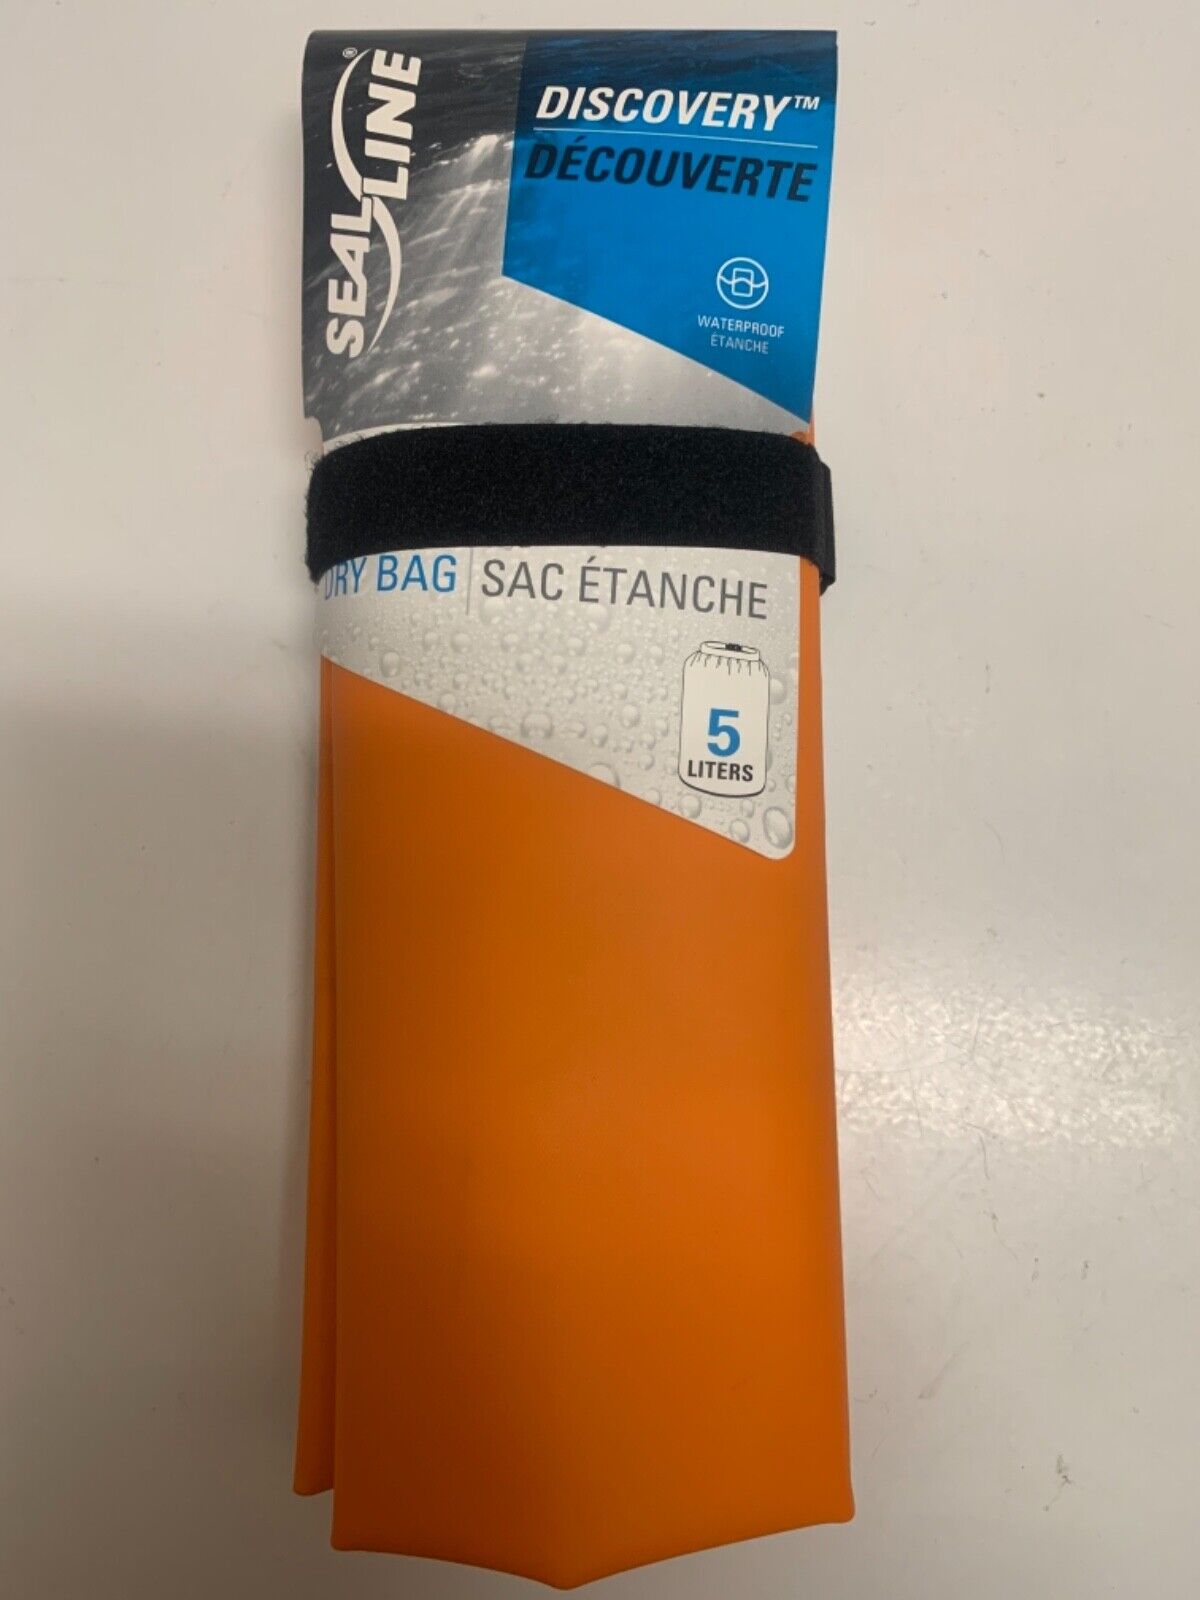 Brand New, Seal Line Discovery Waterproof Dry Bag, 5 Liter, Orange Color